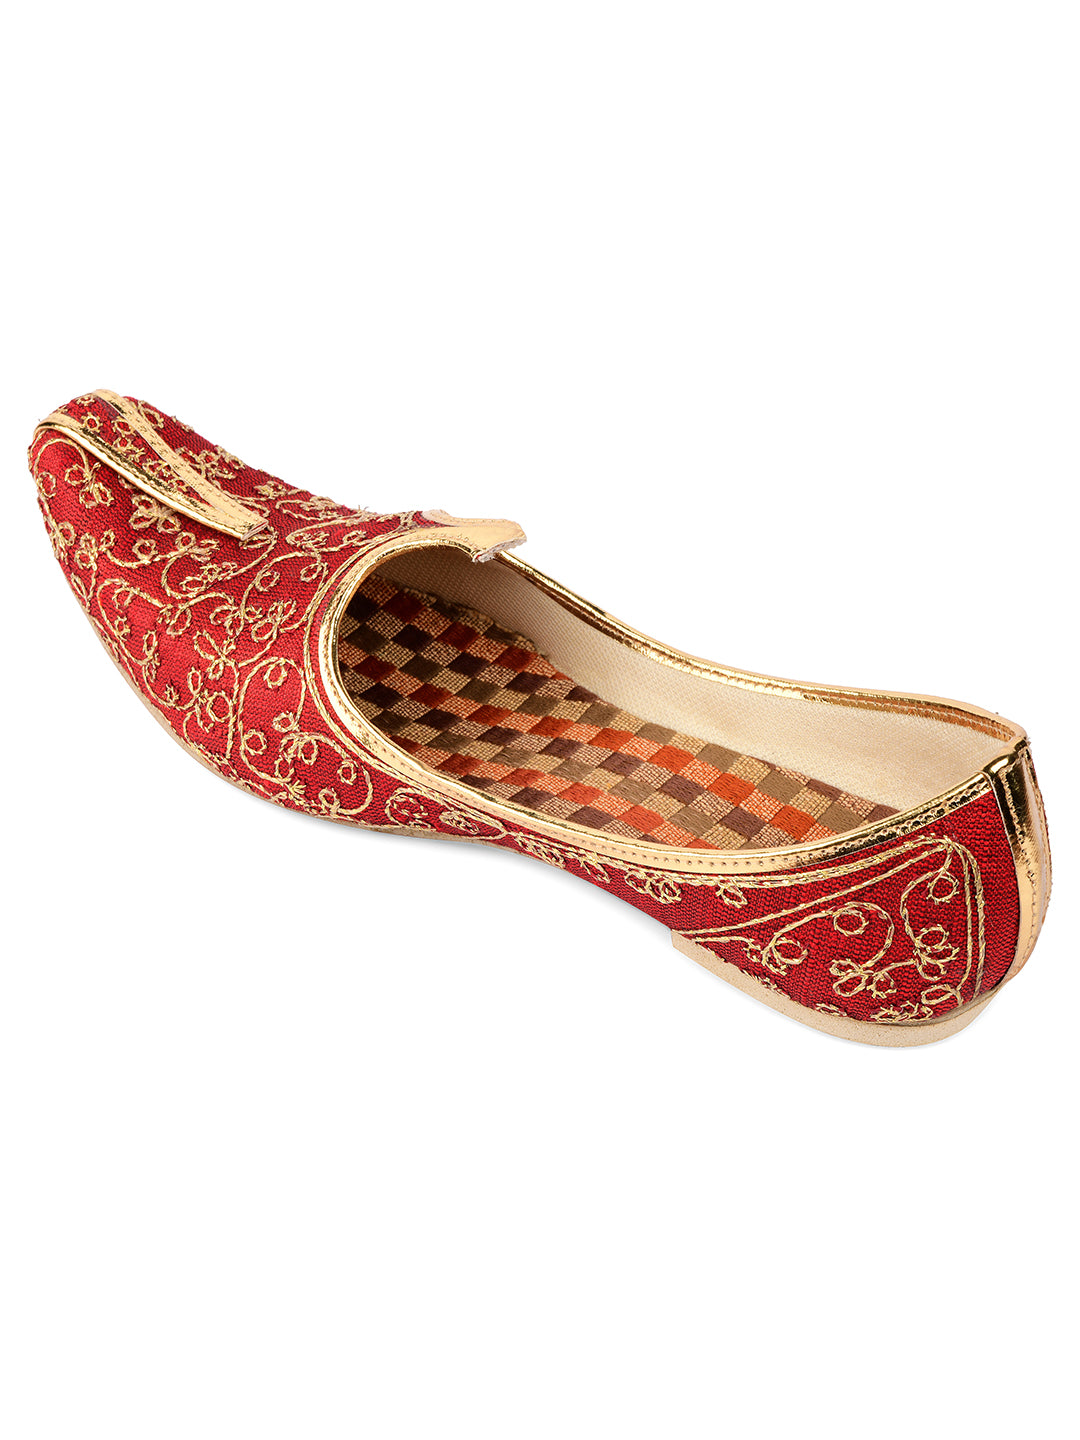 DESI COLOUR Mens Maroon Ethnic Footwear/Punjabi Jutti